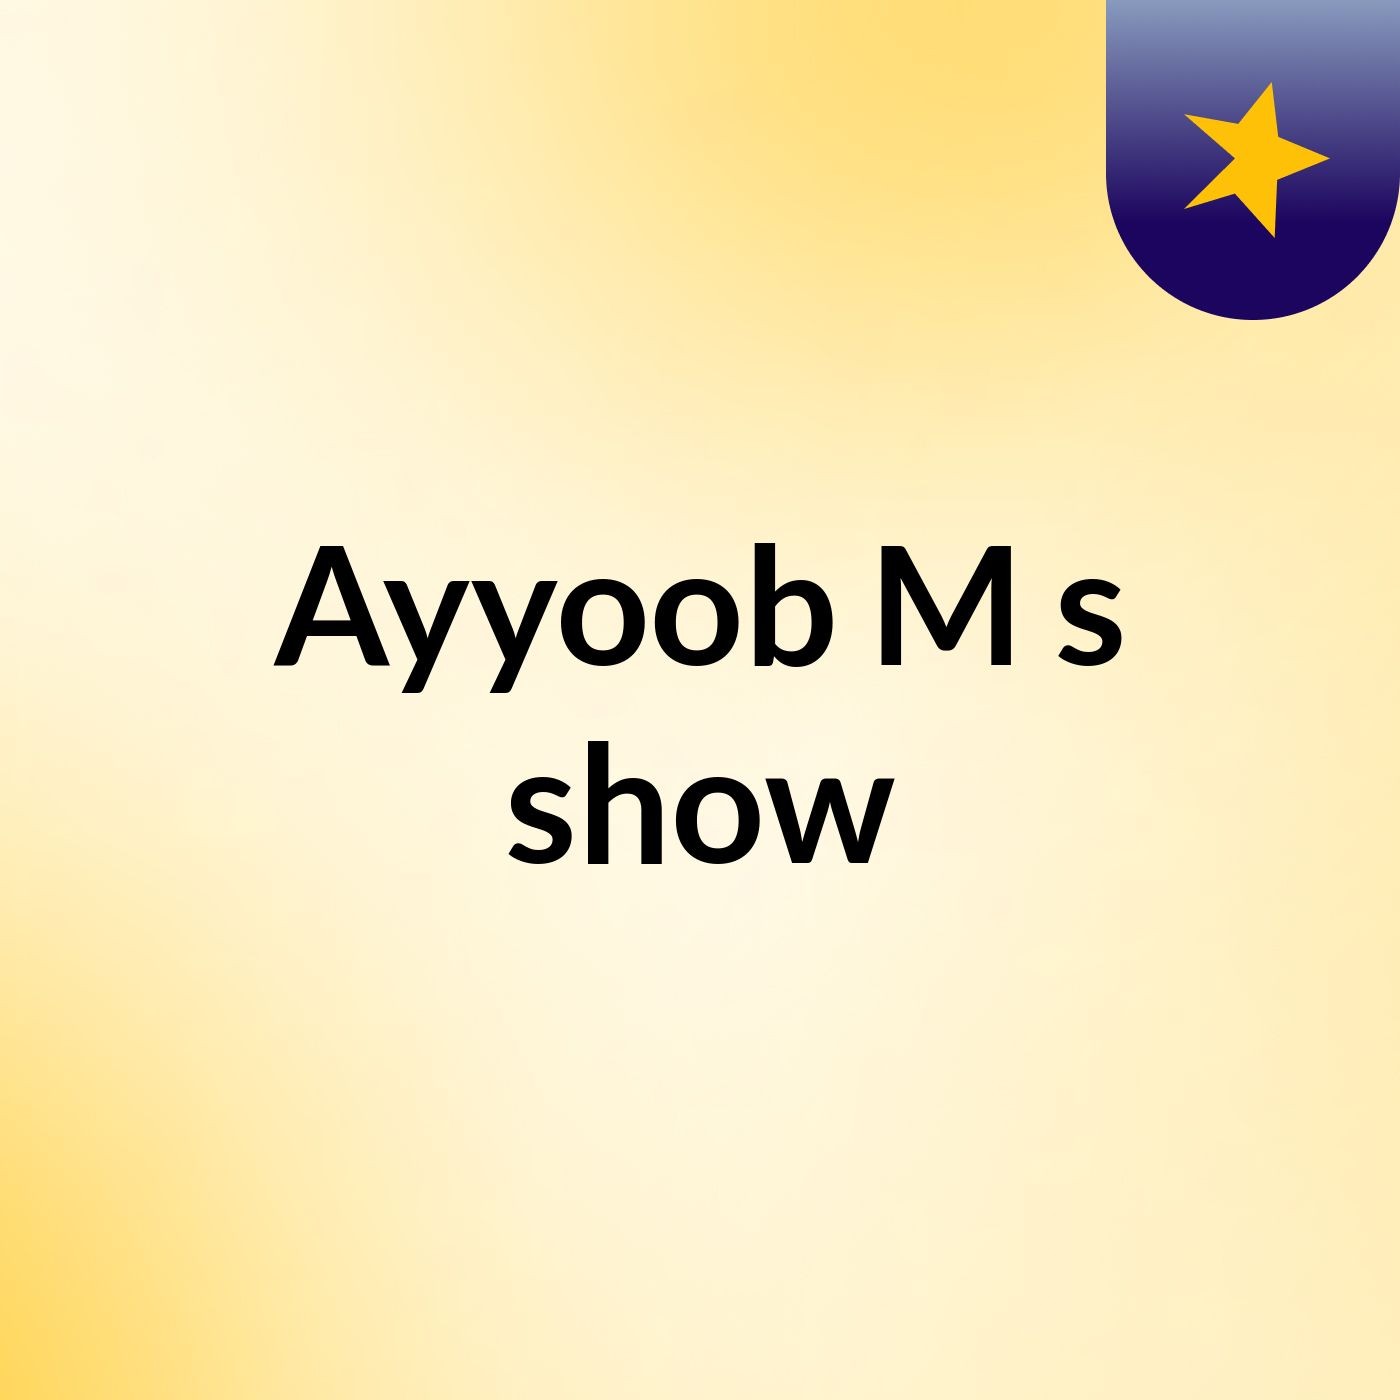 Ayyoob M's show